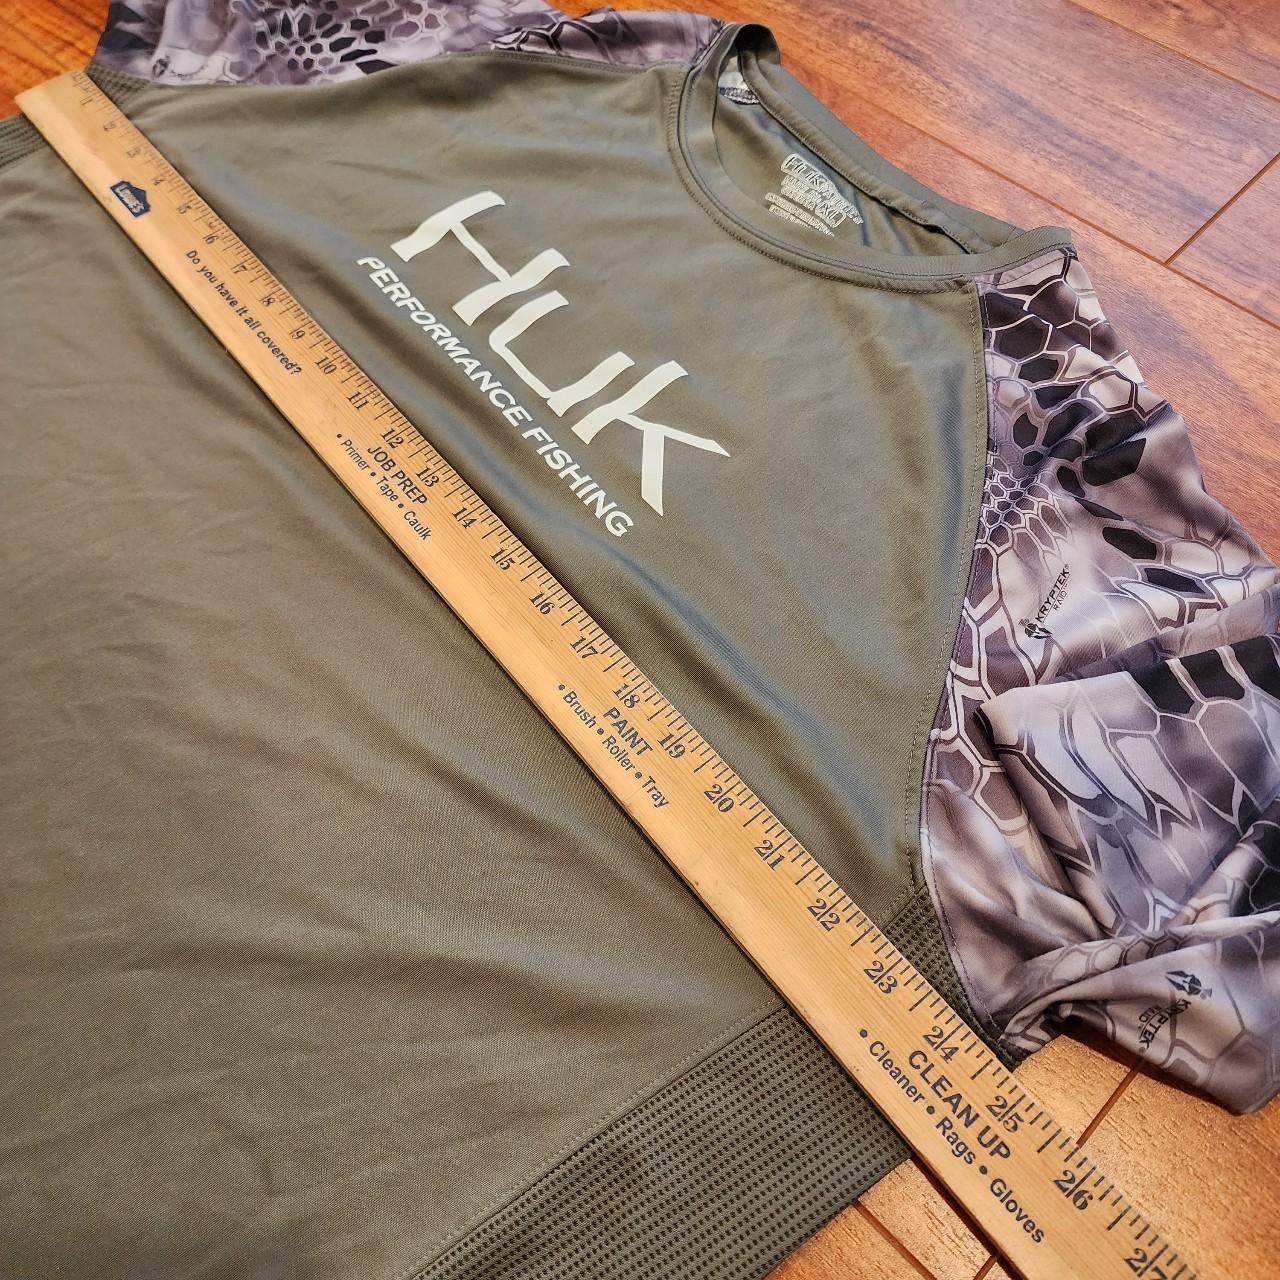 Huk Performance Fishing Long Sleeve T-Shirt Size XL - Depop